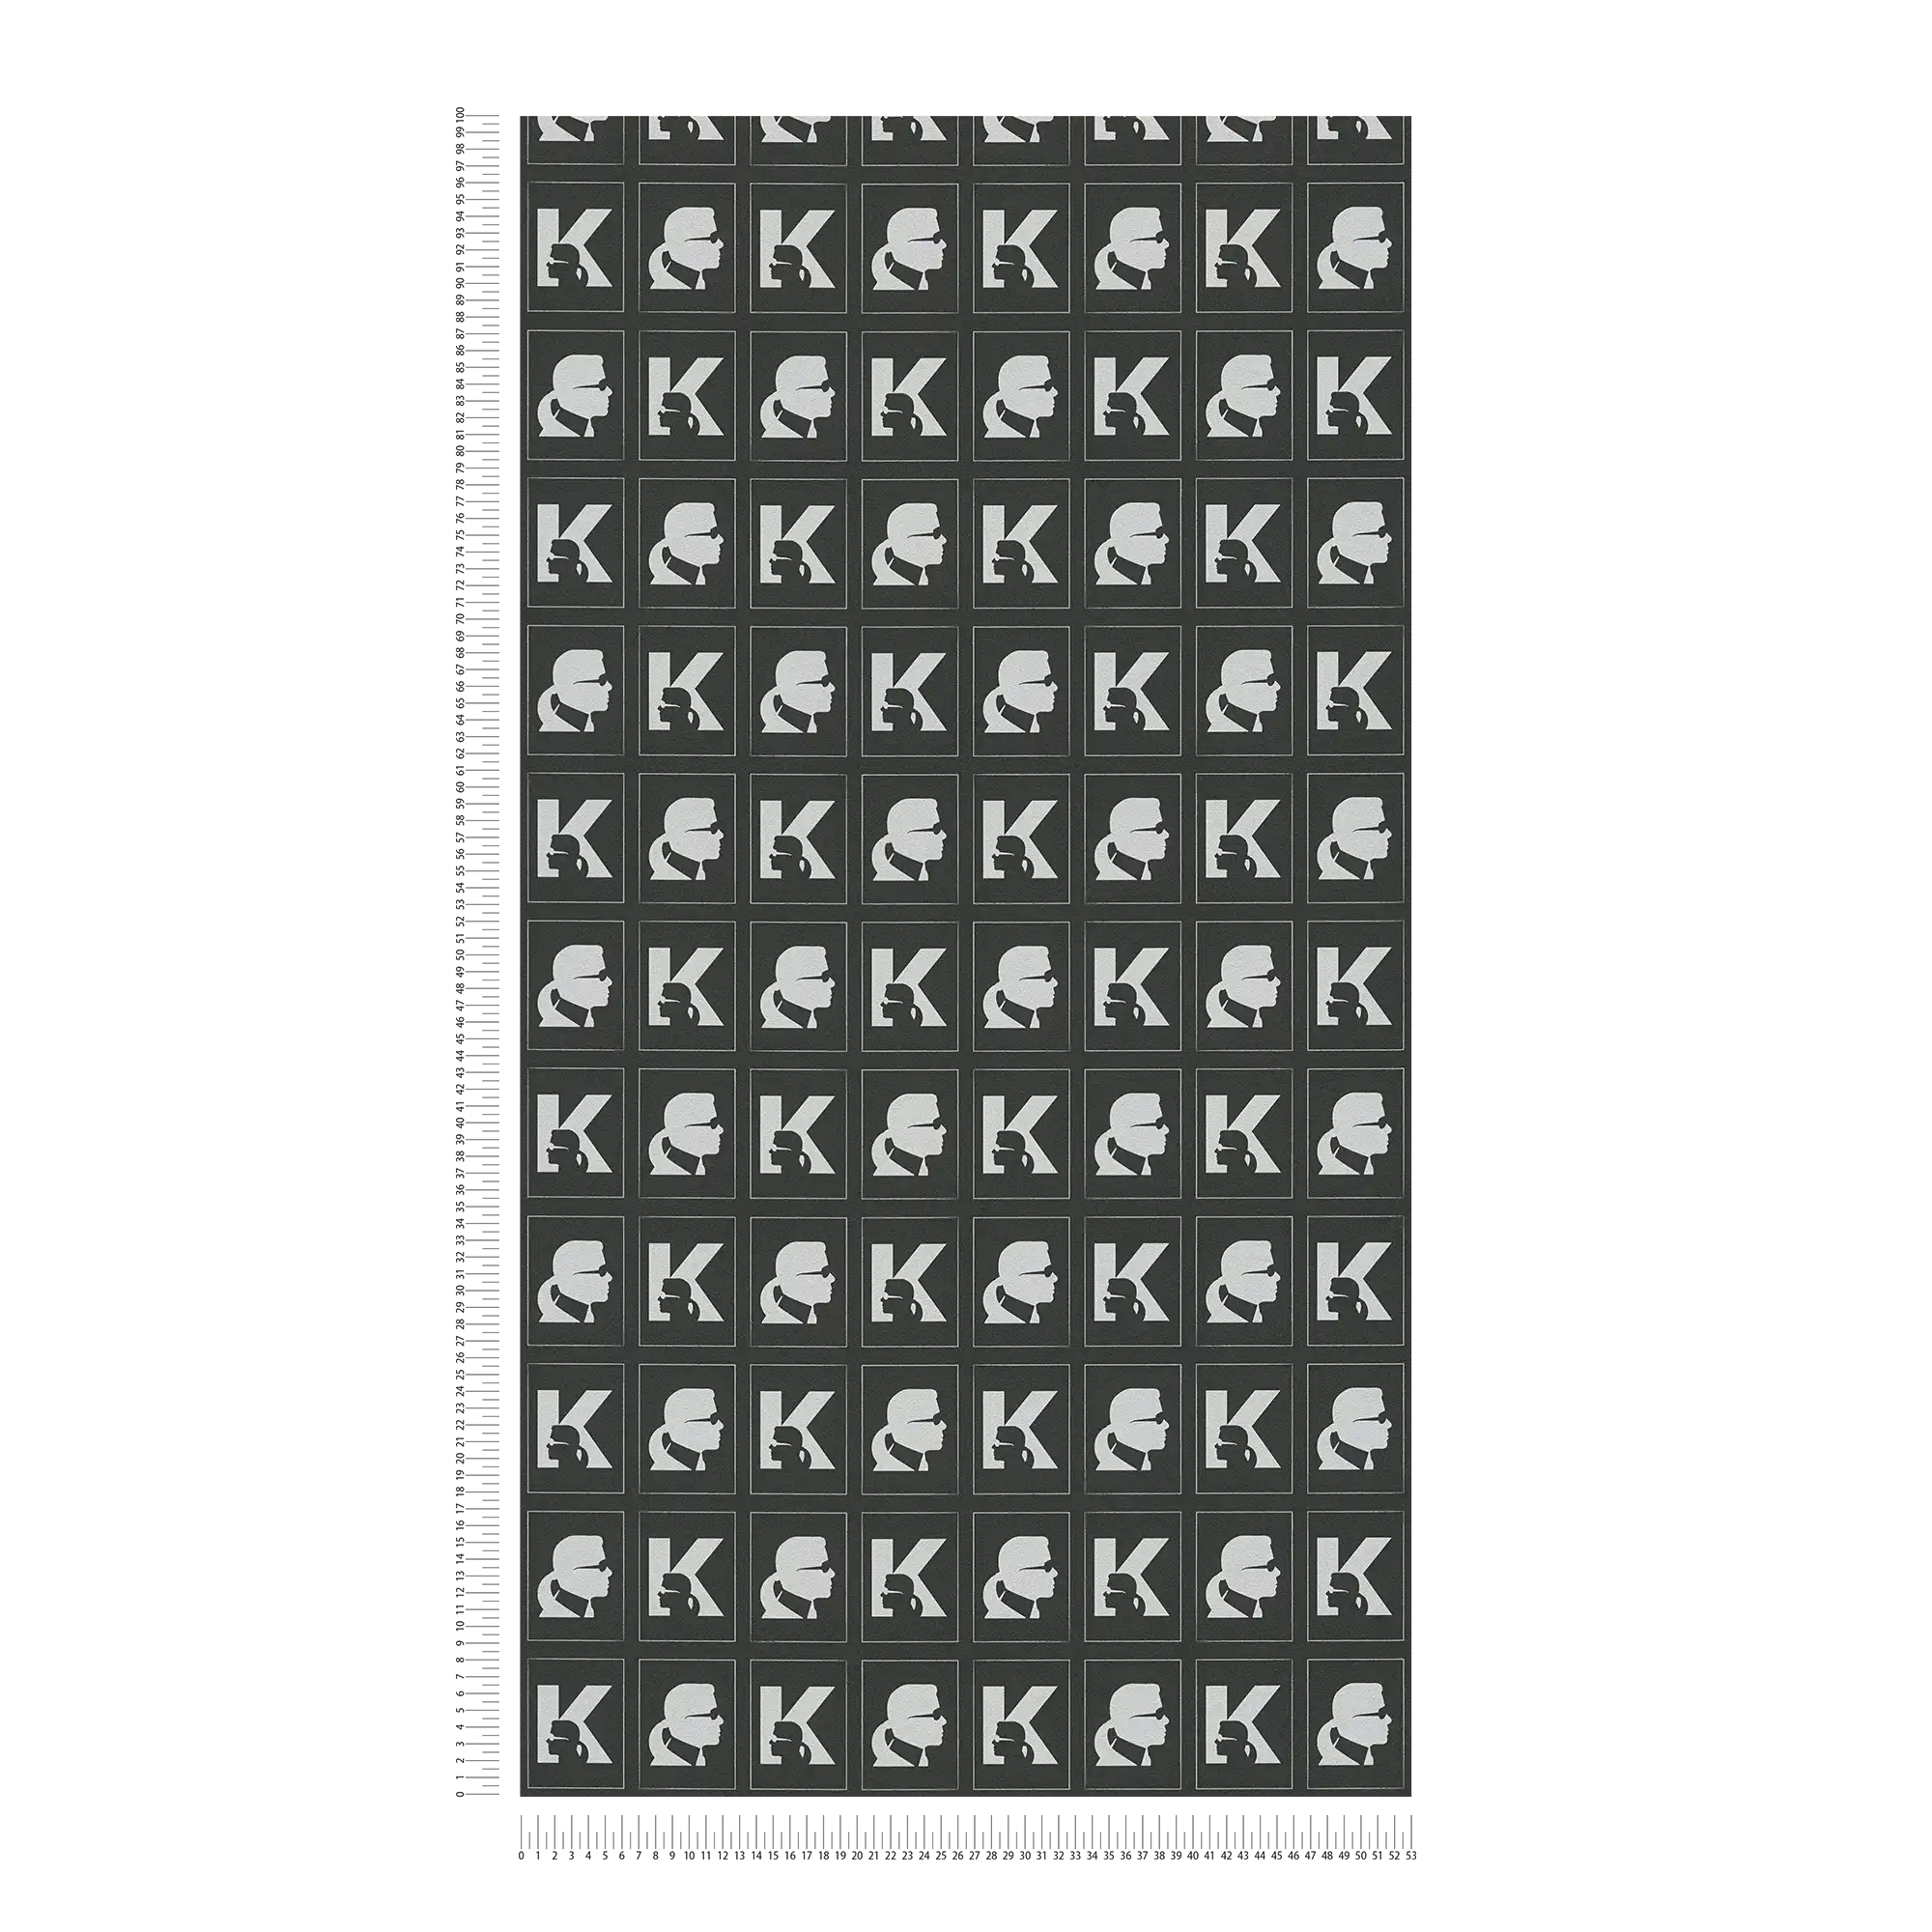             Karl LAGERFELD Vliestapete Emblem-Muster – Metallic, Schwarz
        